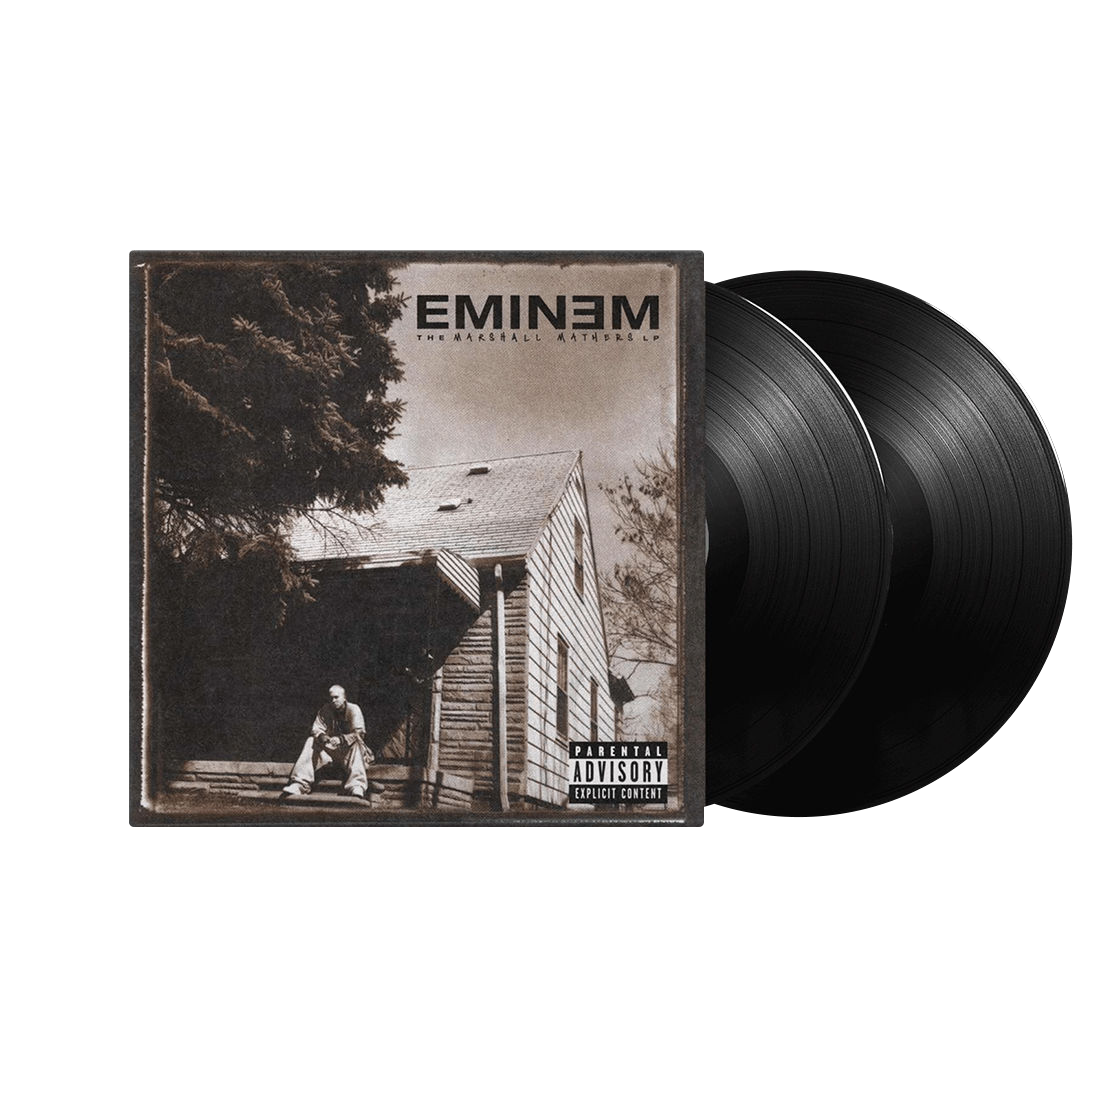 Eminem - The Marshall Mathers LP: Deluxe Vinyl 2LP